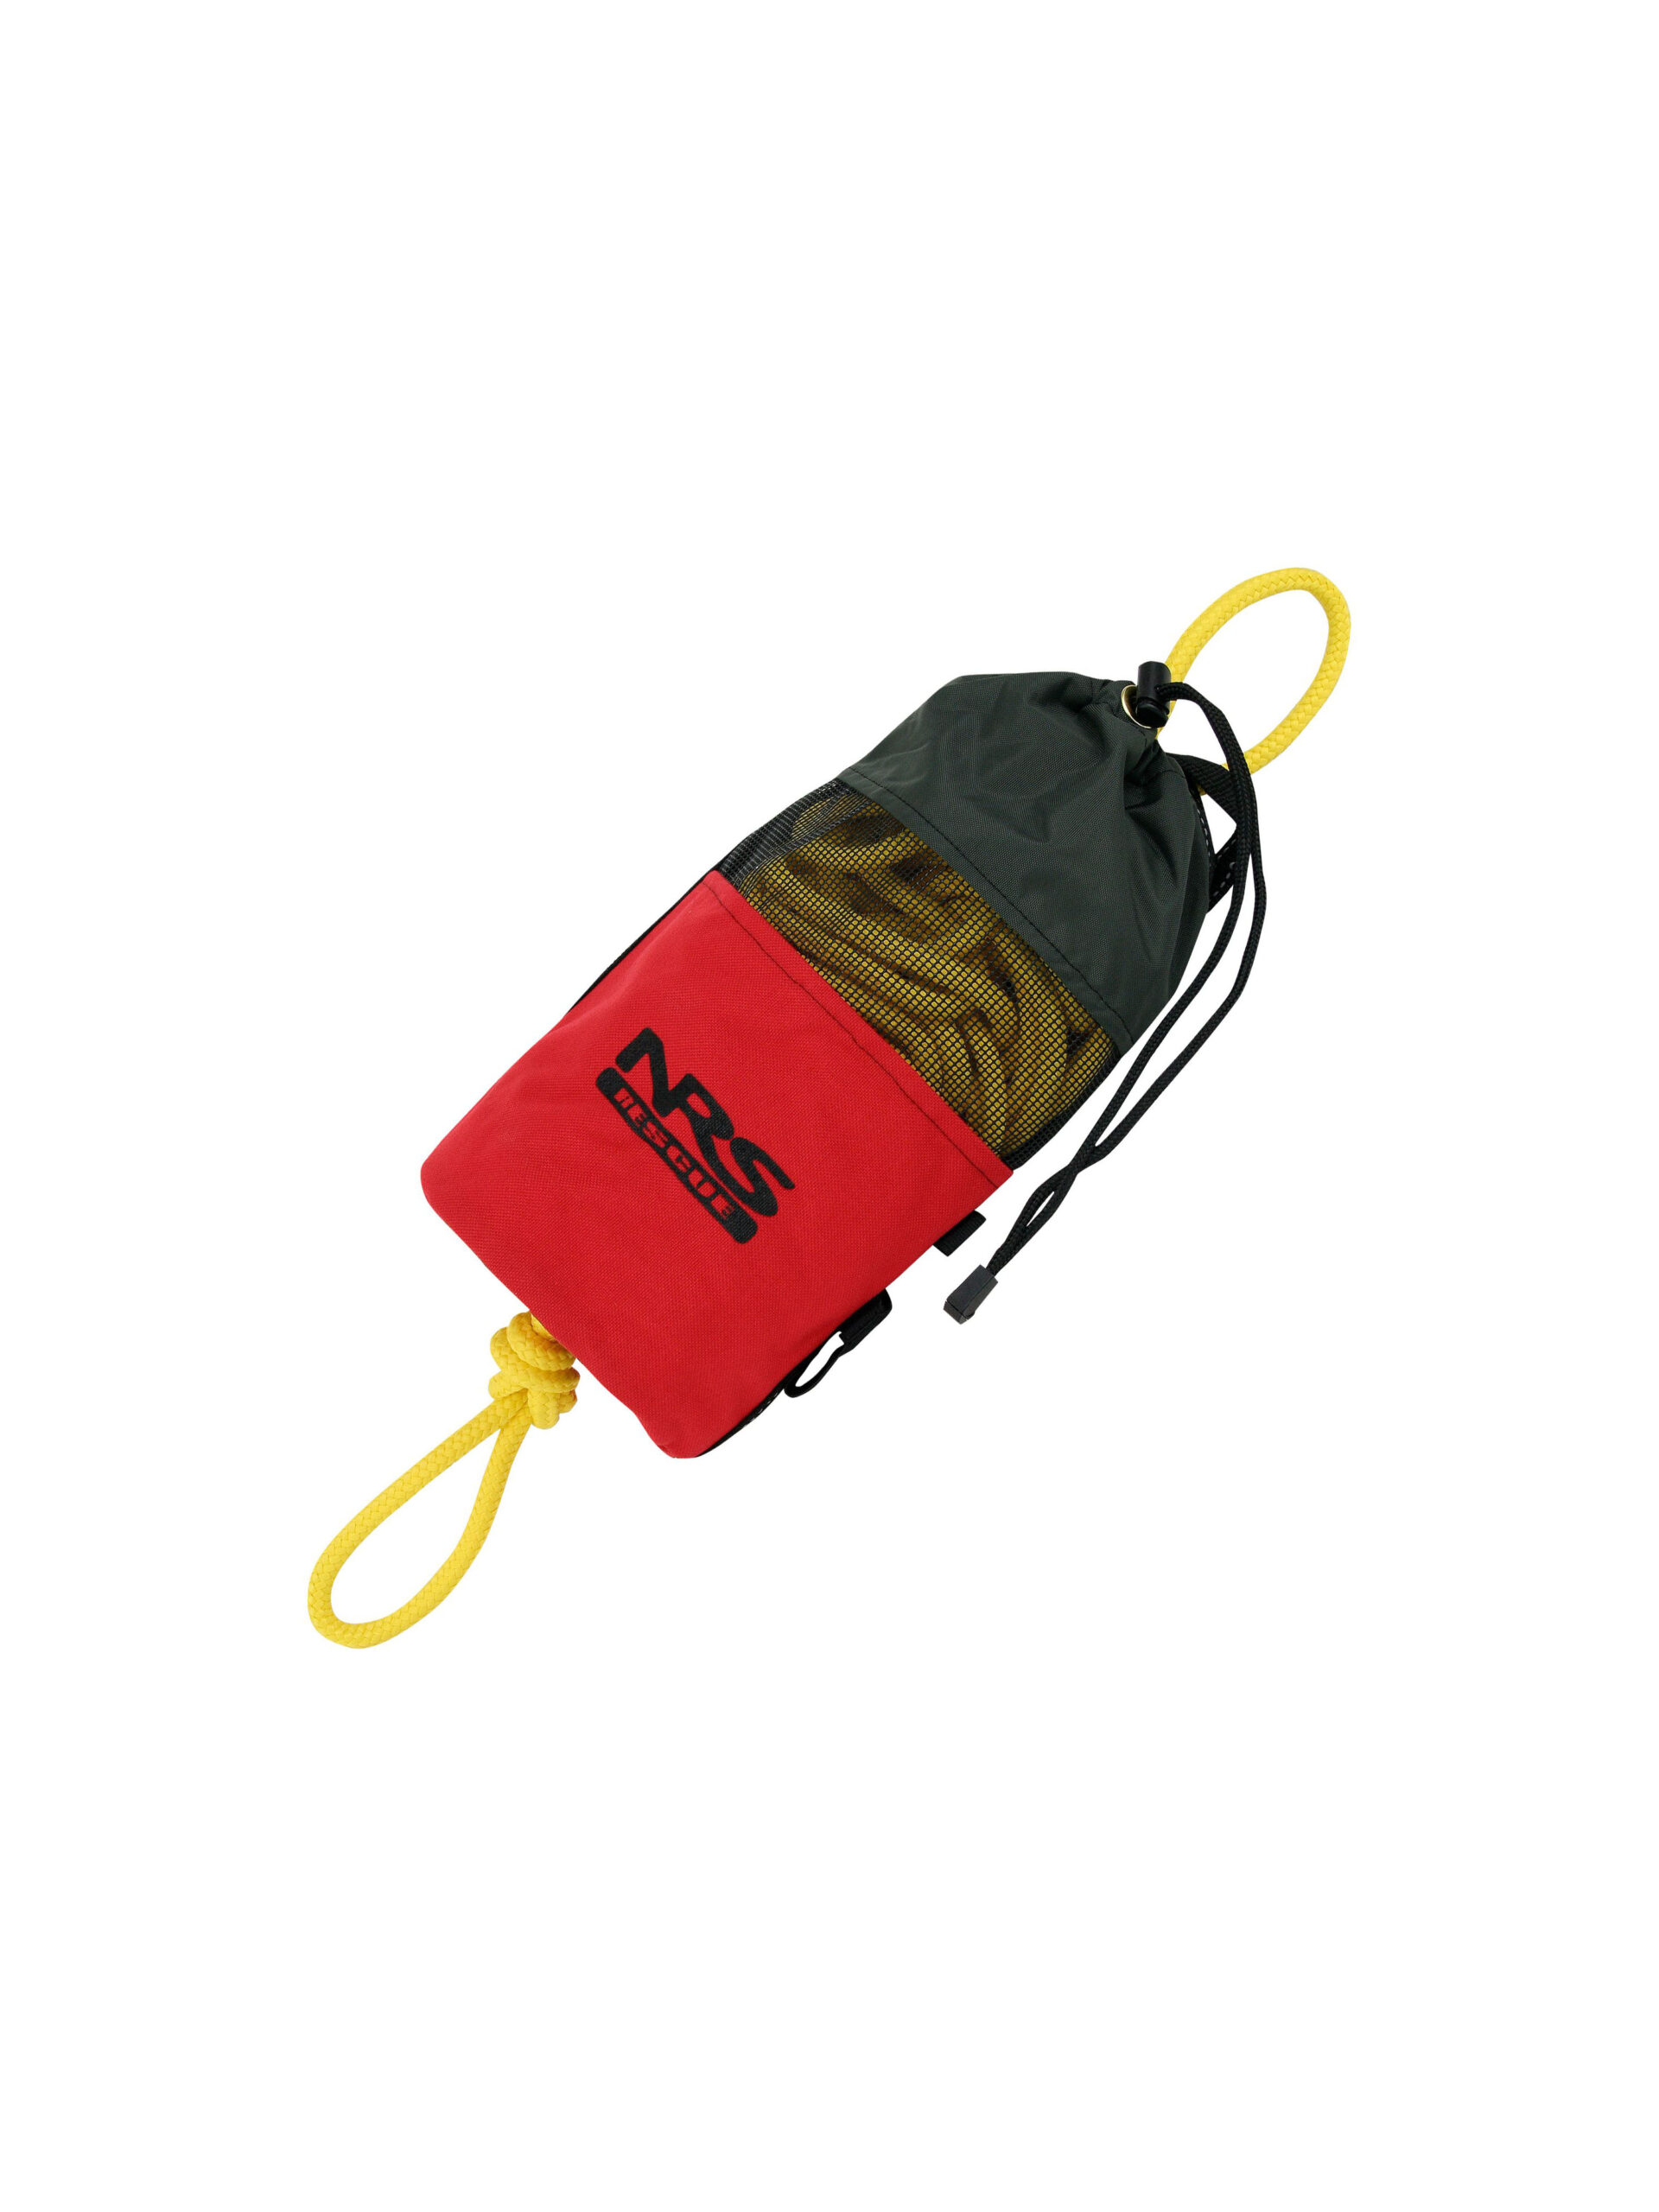 Rescue Kit Bag 30L | KStrong Asia